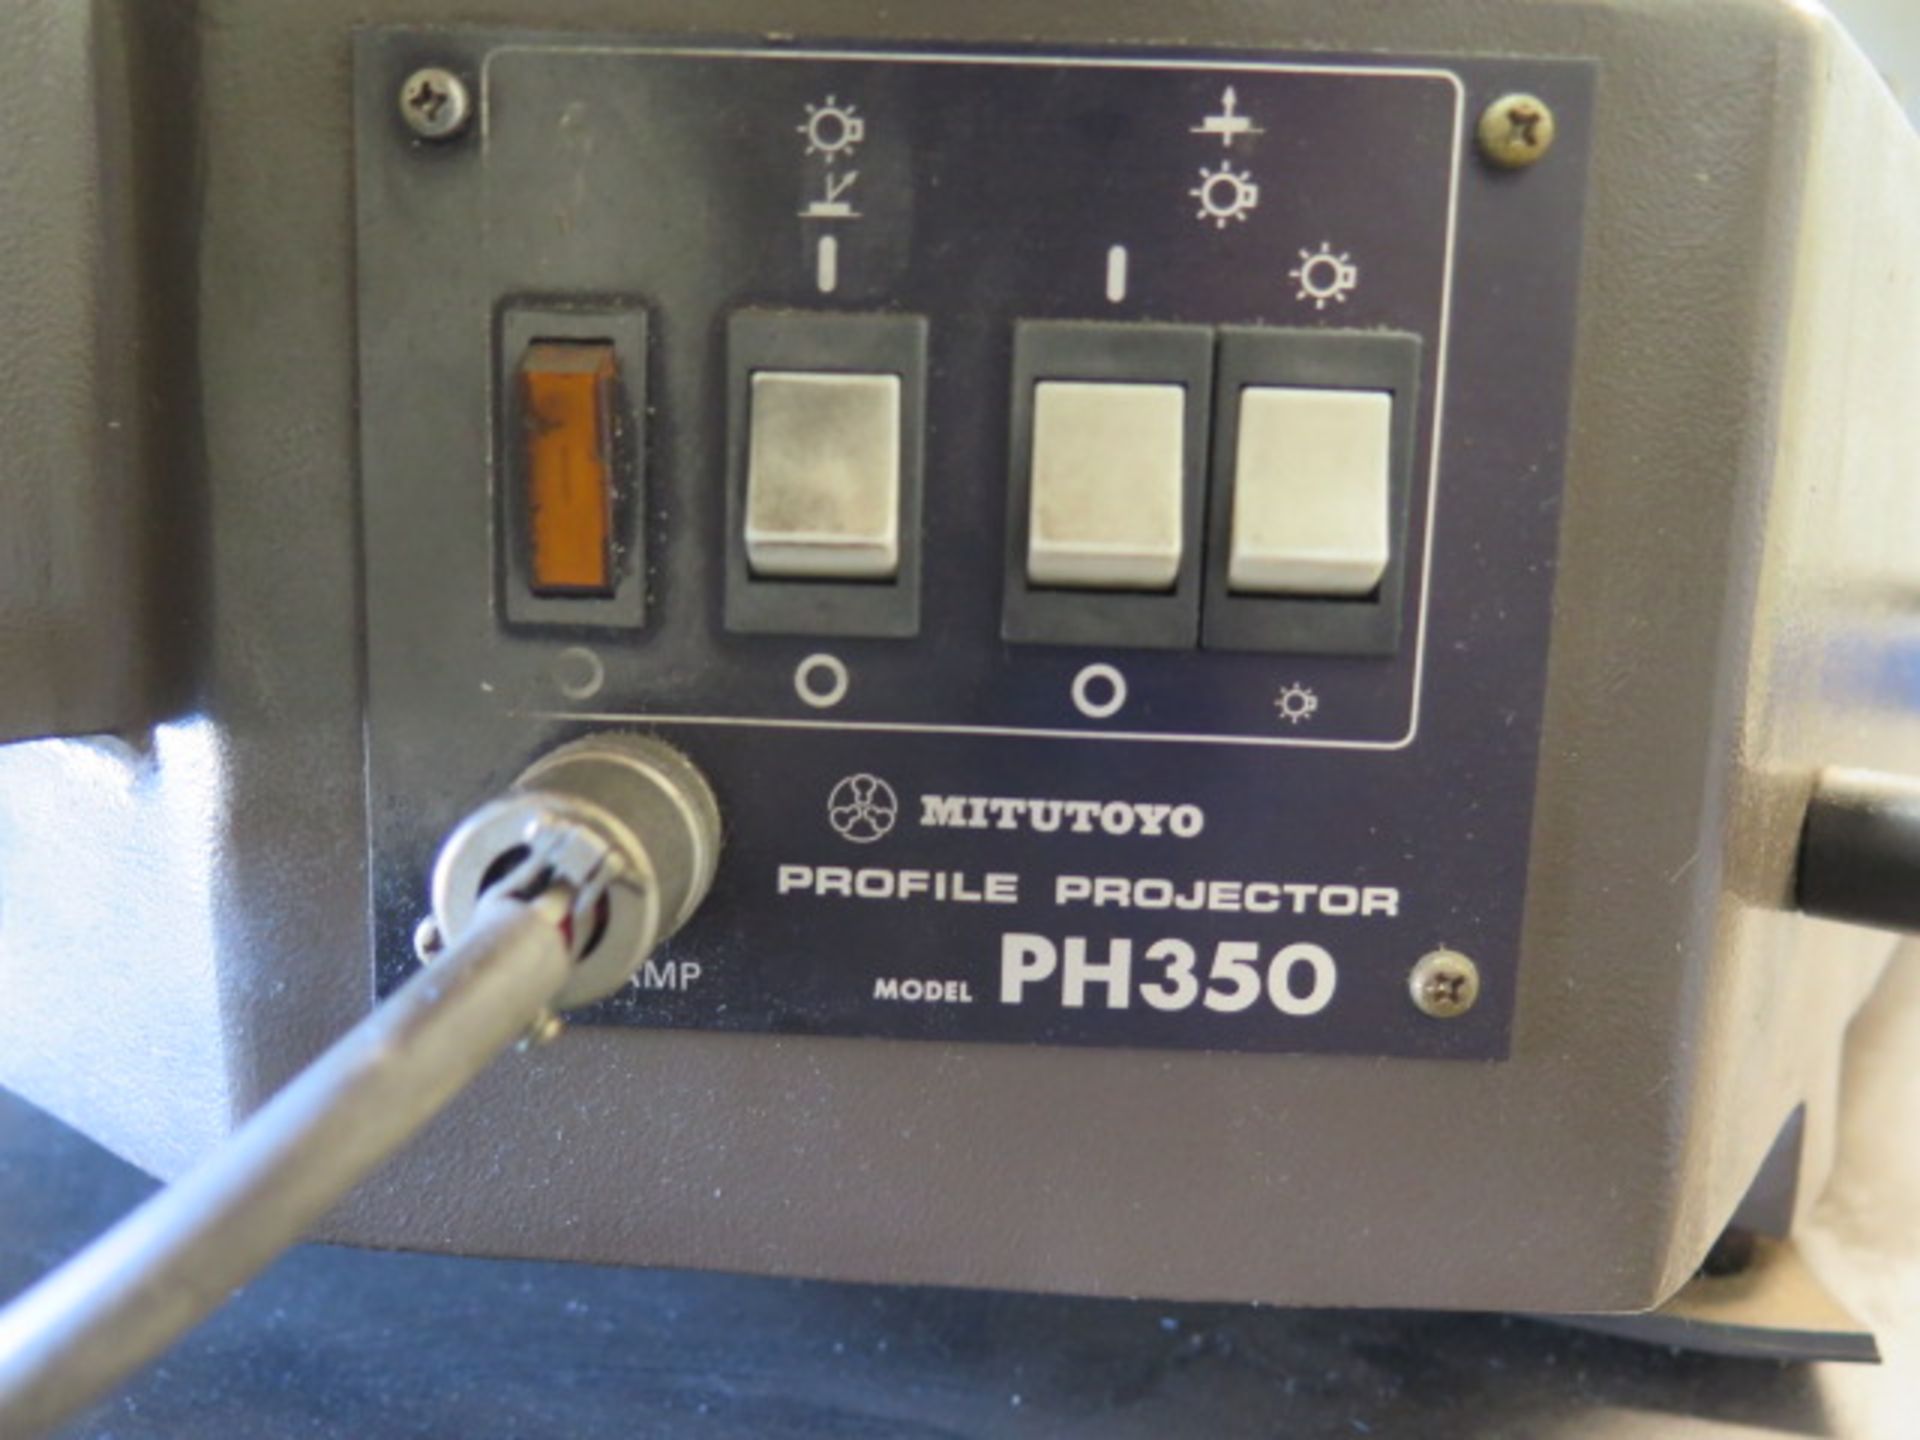 Mitutoyo PH350 13" Optical Comparator s/n 60251 w/ Optoeye M1 Edge Detector, Dial Indicator - Image 7 of 8